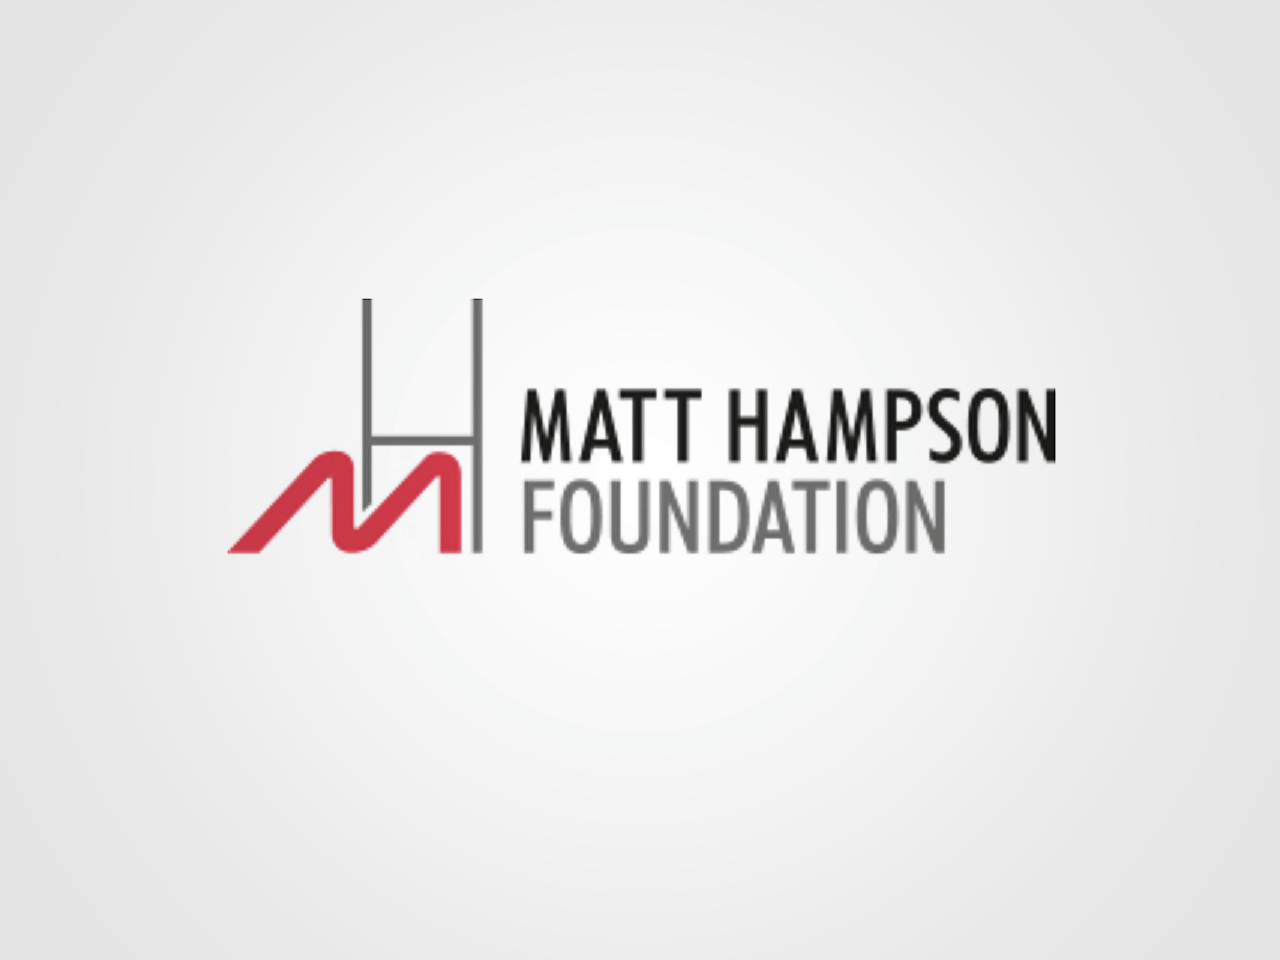 Matt Hampson Foundation